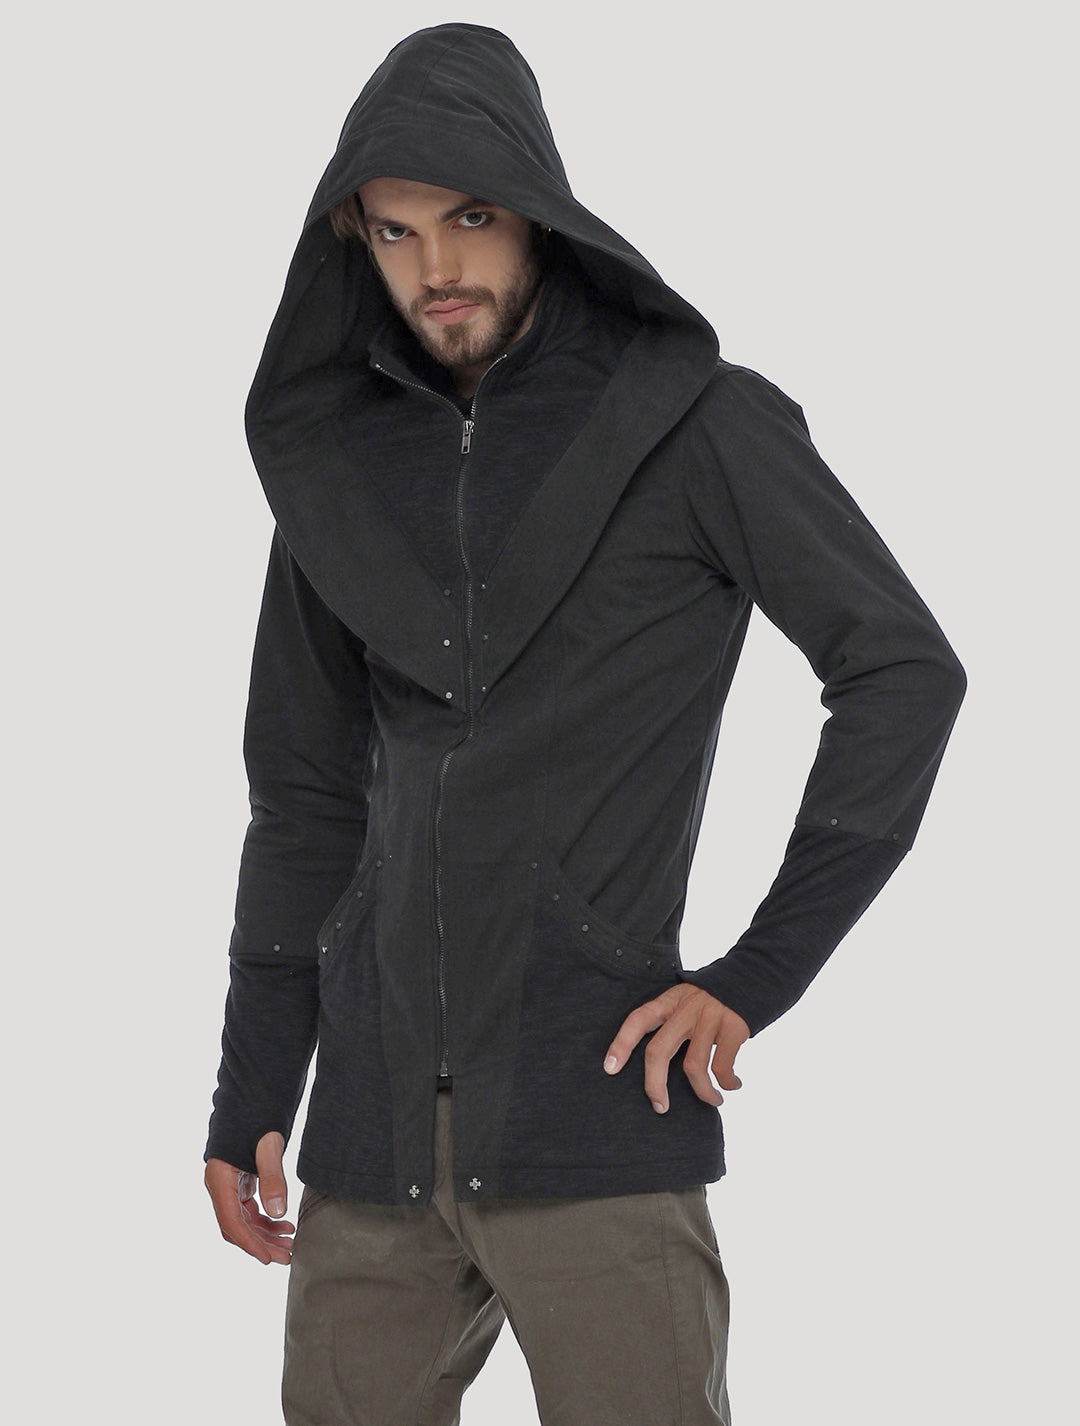 dulce hoodie long coat jacket psylo fashion